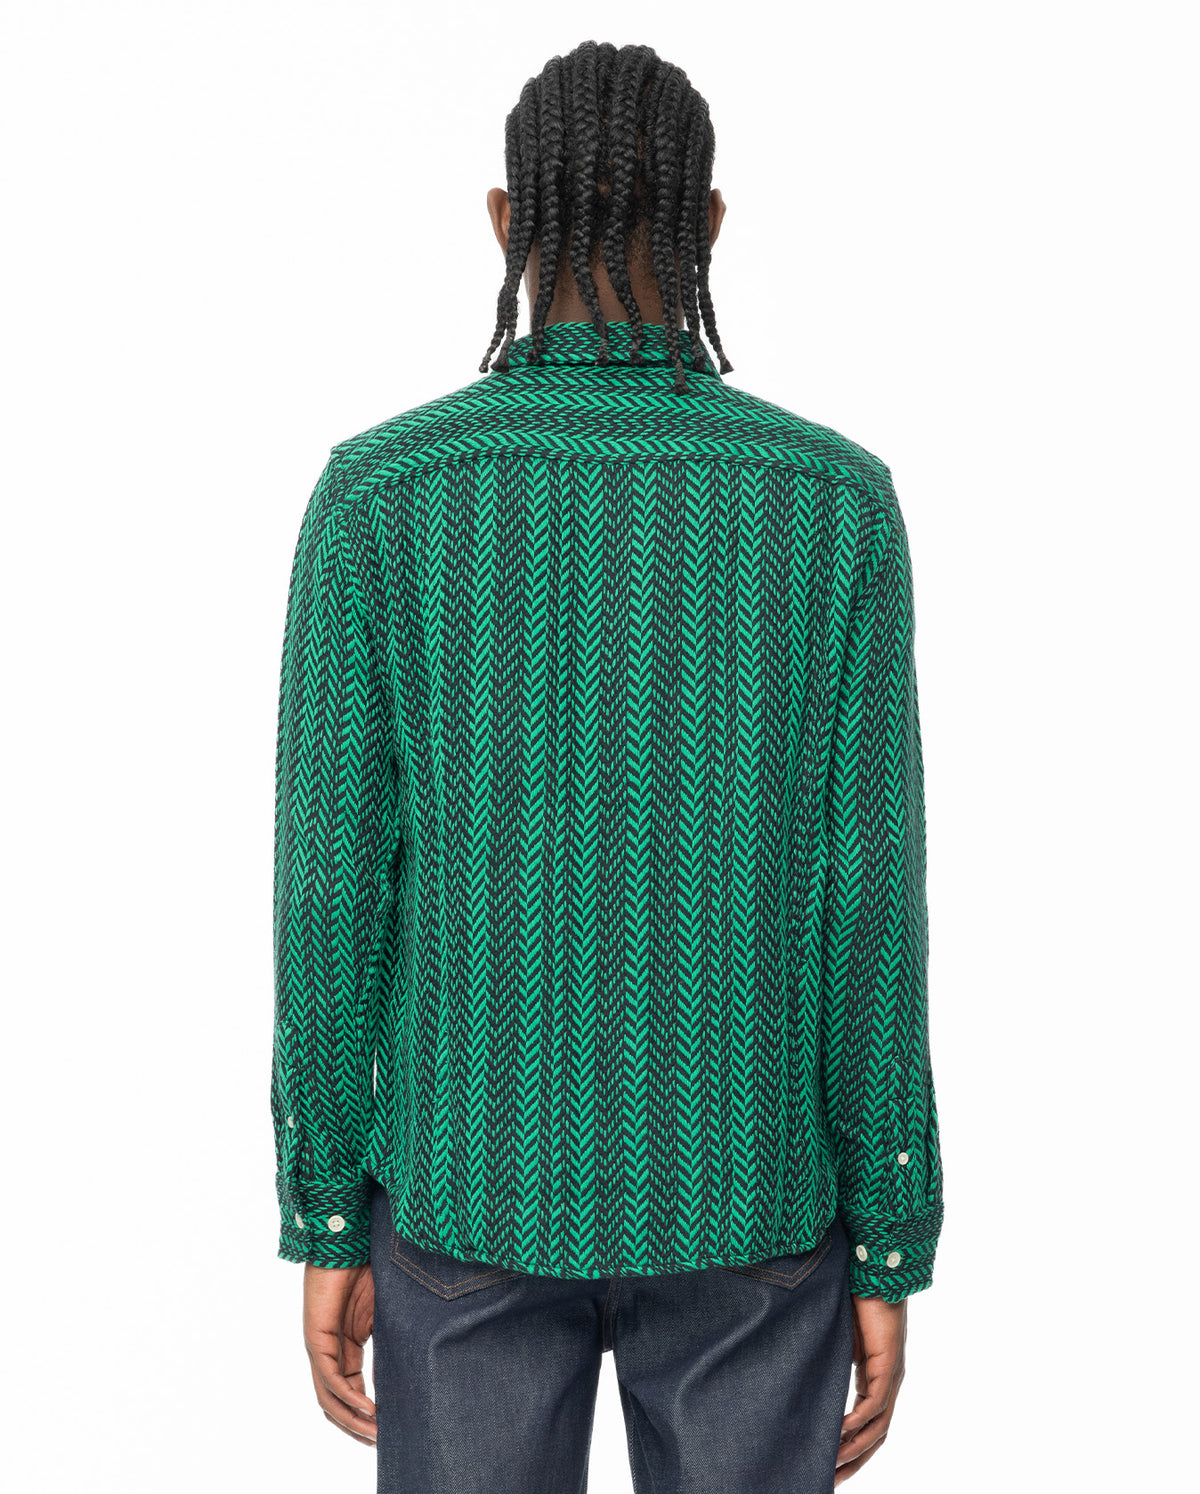 Acid Plaid Striped Long Sleeve Shirt - Green